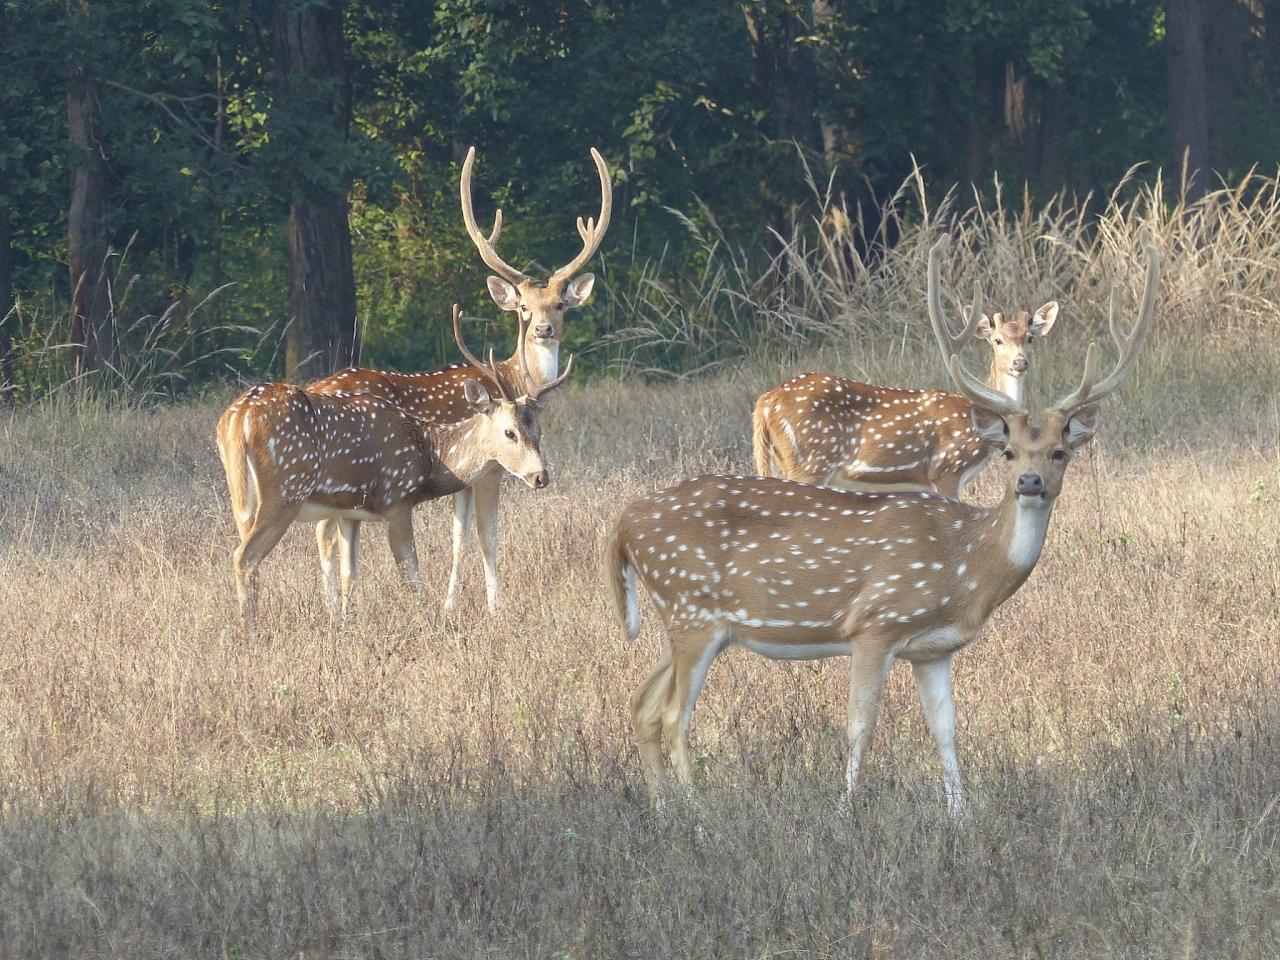 Chital,India Nature Tour, India Wildlife Tour, India Wildlife Safari, Naturalist Journeys Birding and Nature tour to Southern India Western Ghats and Nagarhole National Park